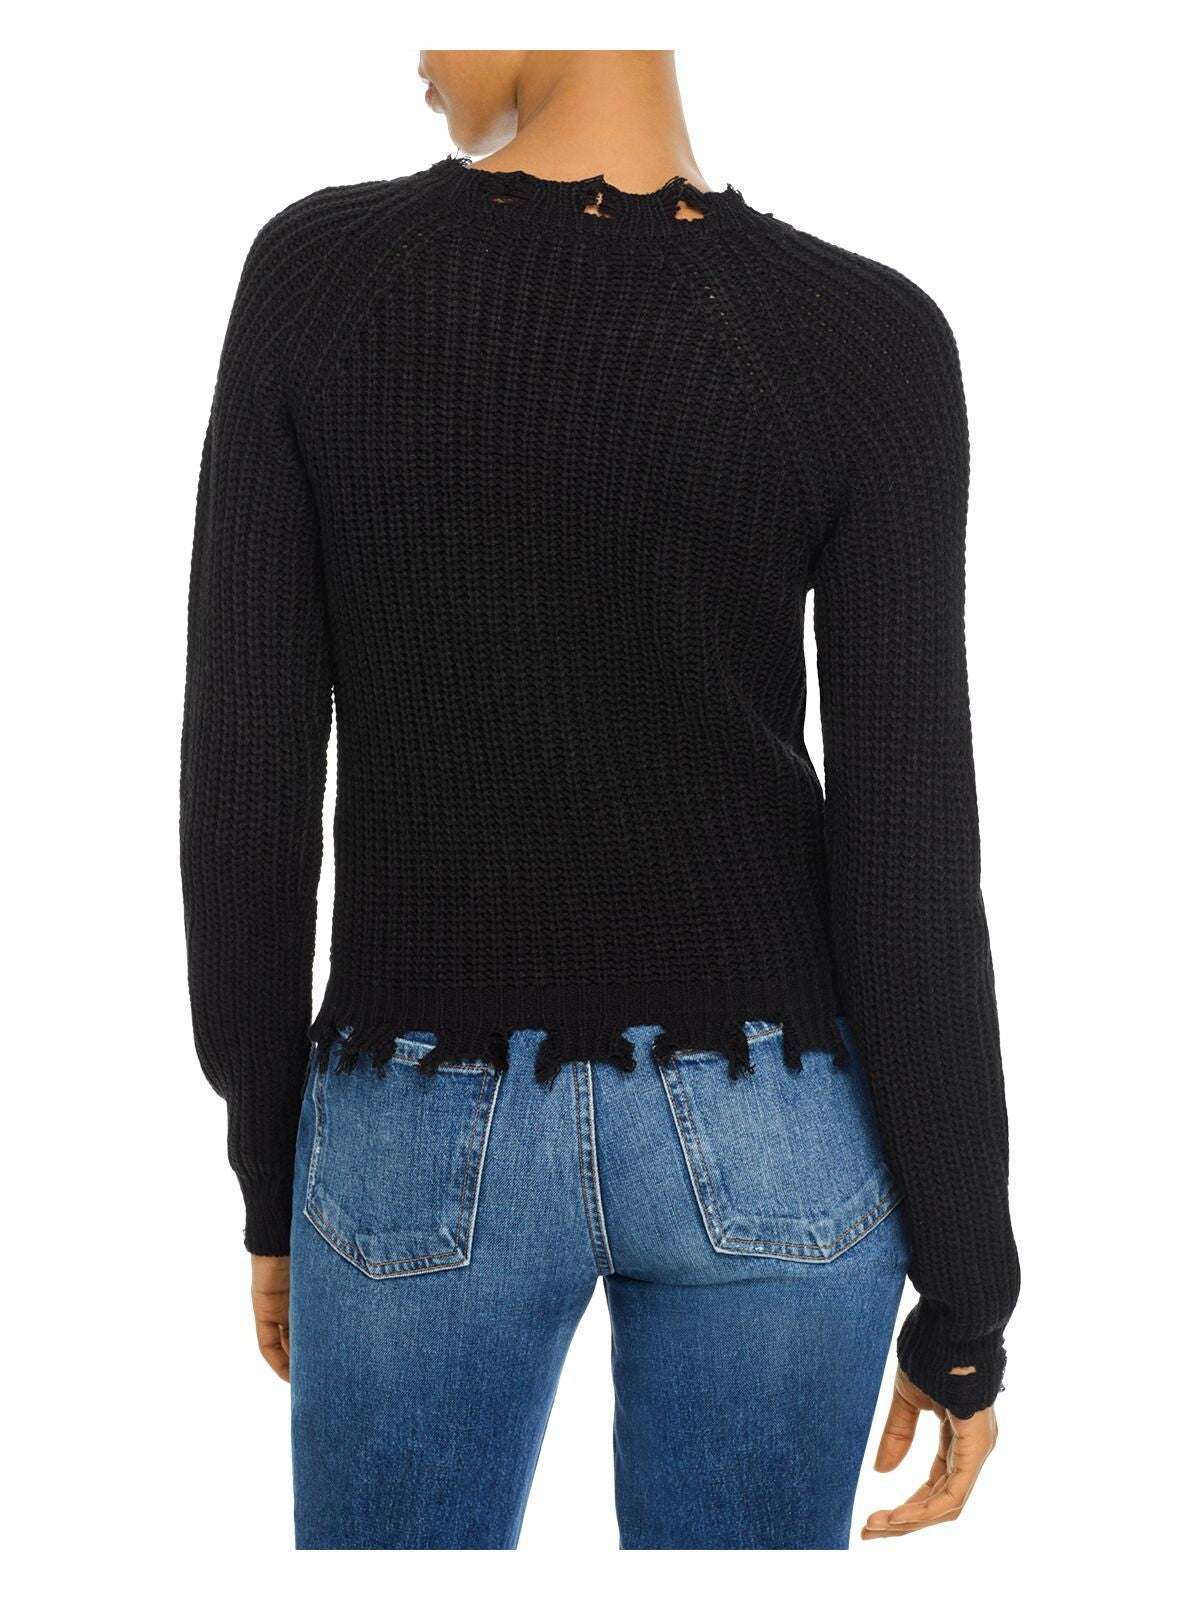 AQUA Womens Black Distressed Shaker-stitch Long Sleeve Scoop Neck Sweater XS